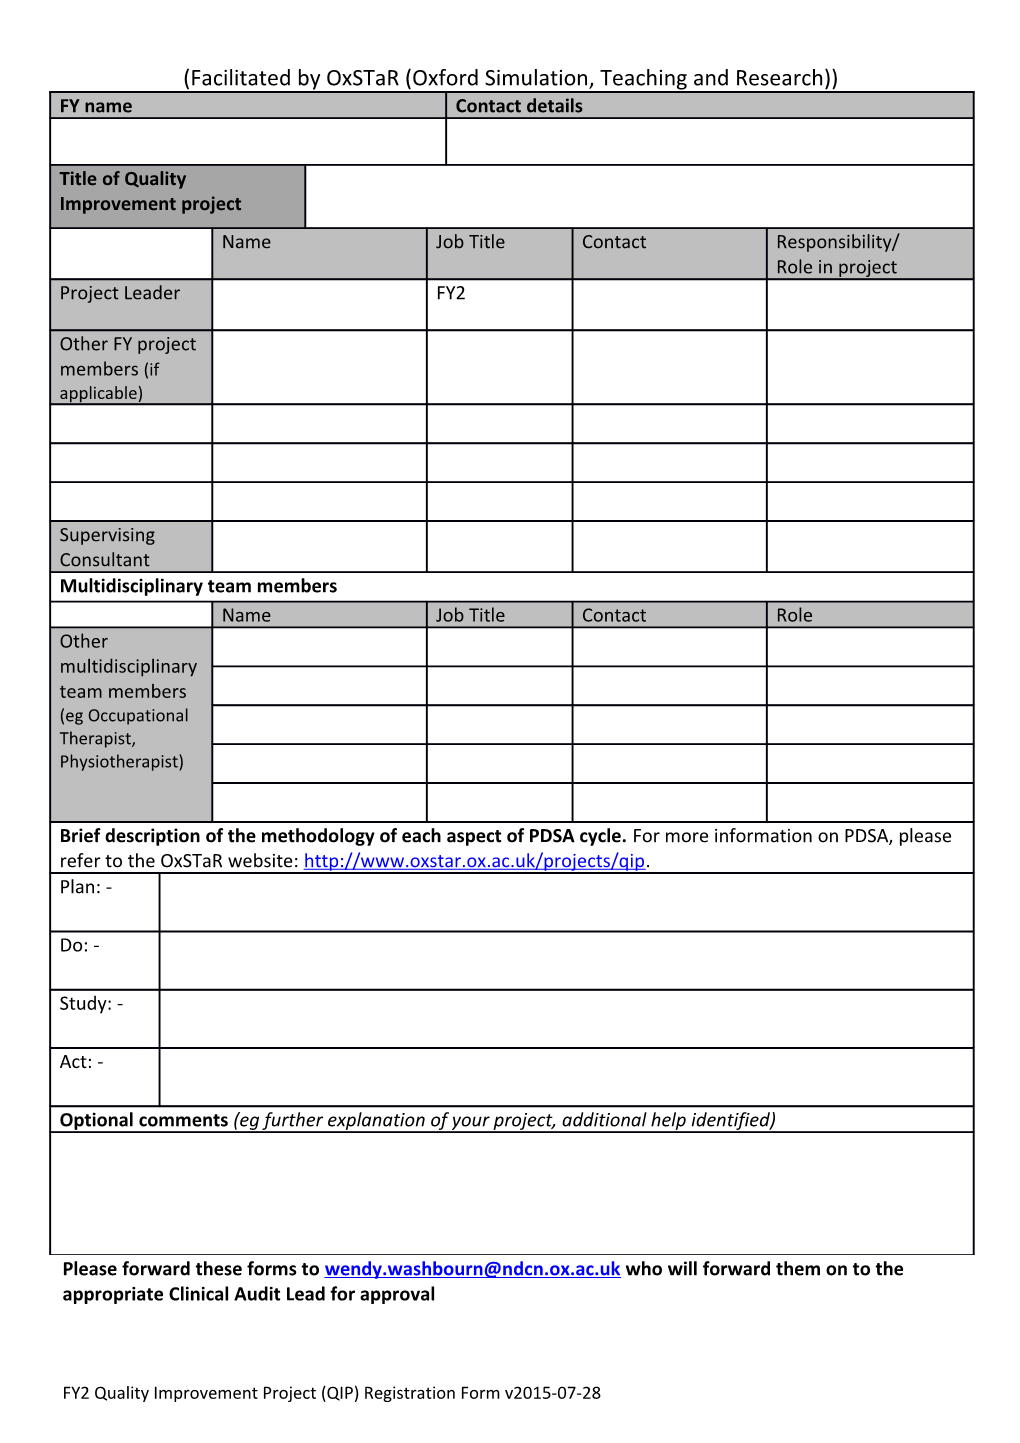 Quality Improvement Project Registration Form